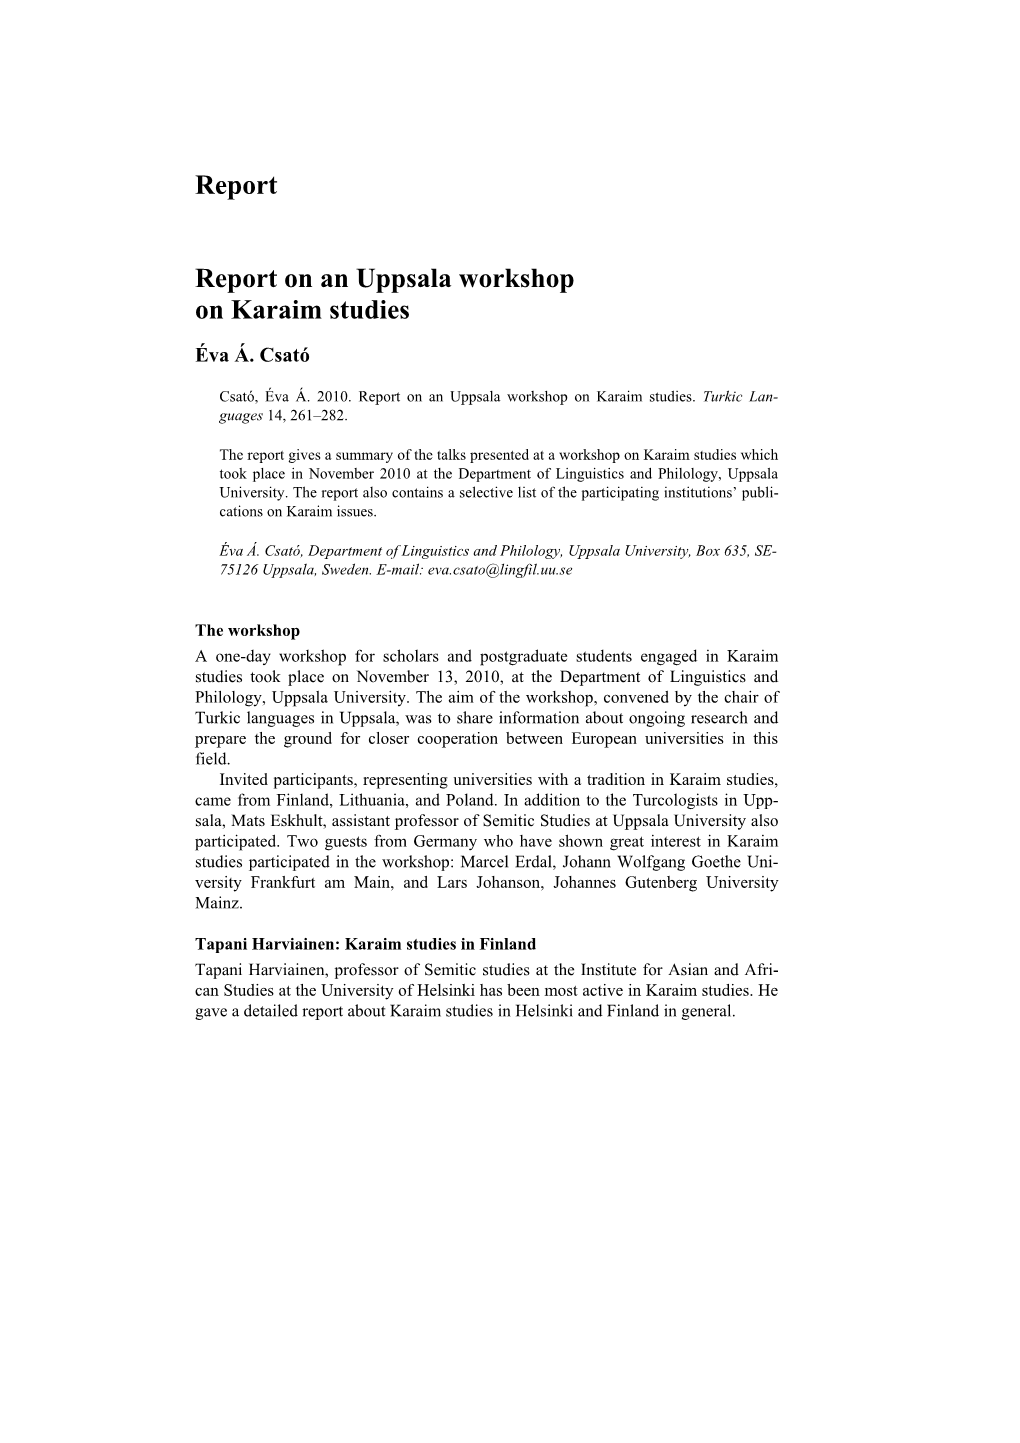 Report Report on an Uppsala Workshop on Karaim Studies